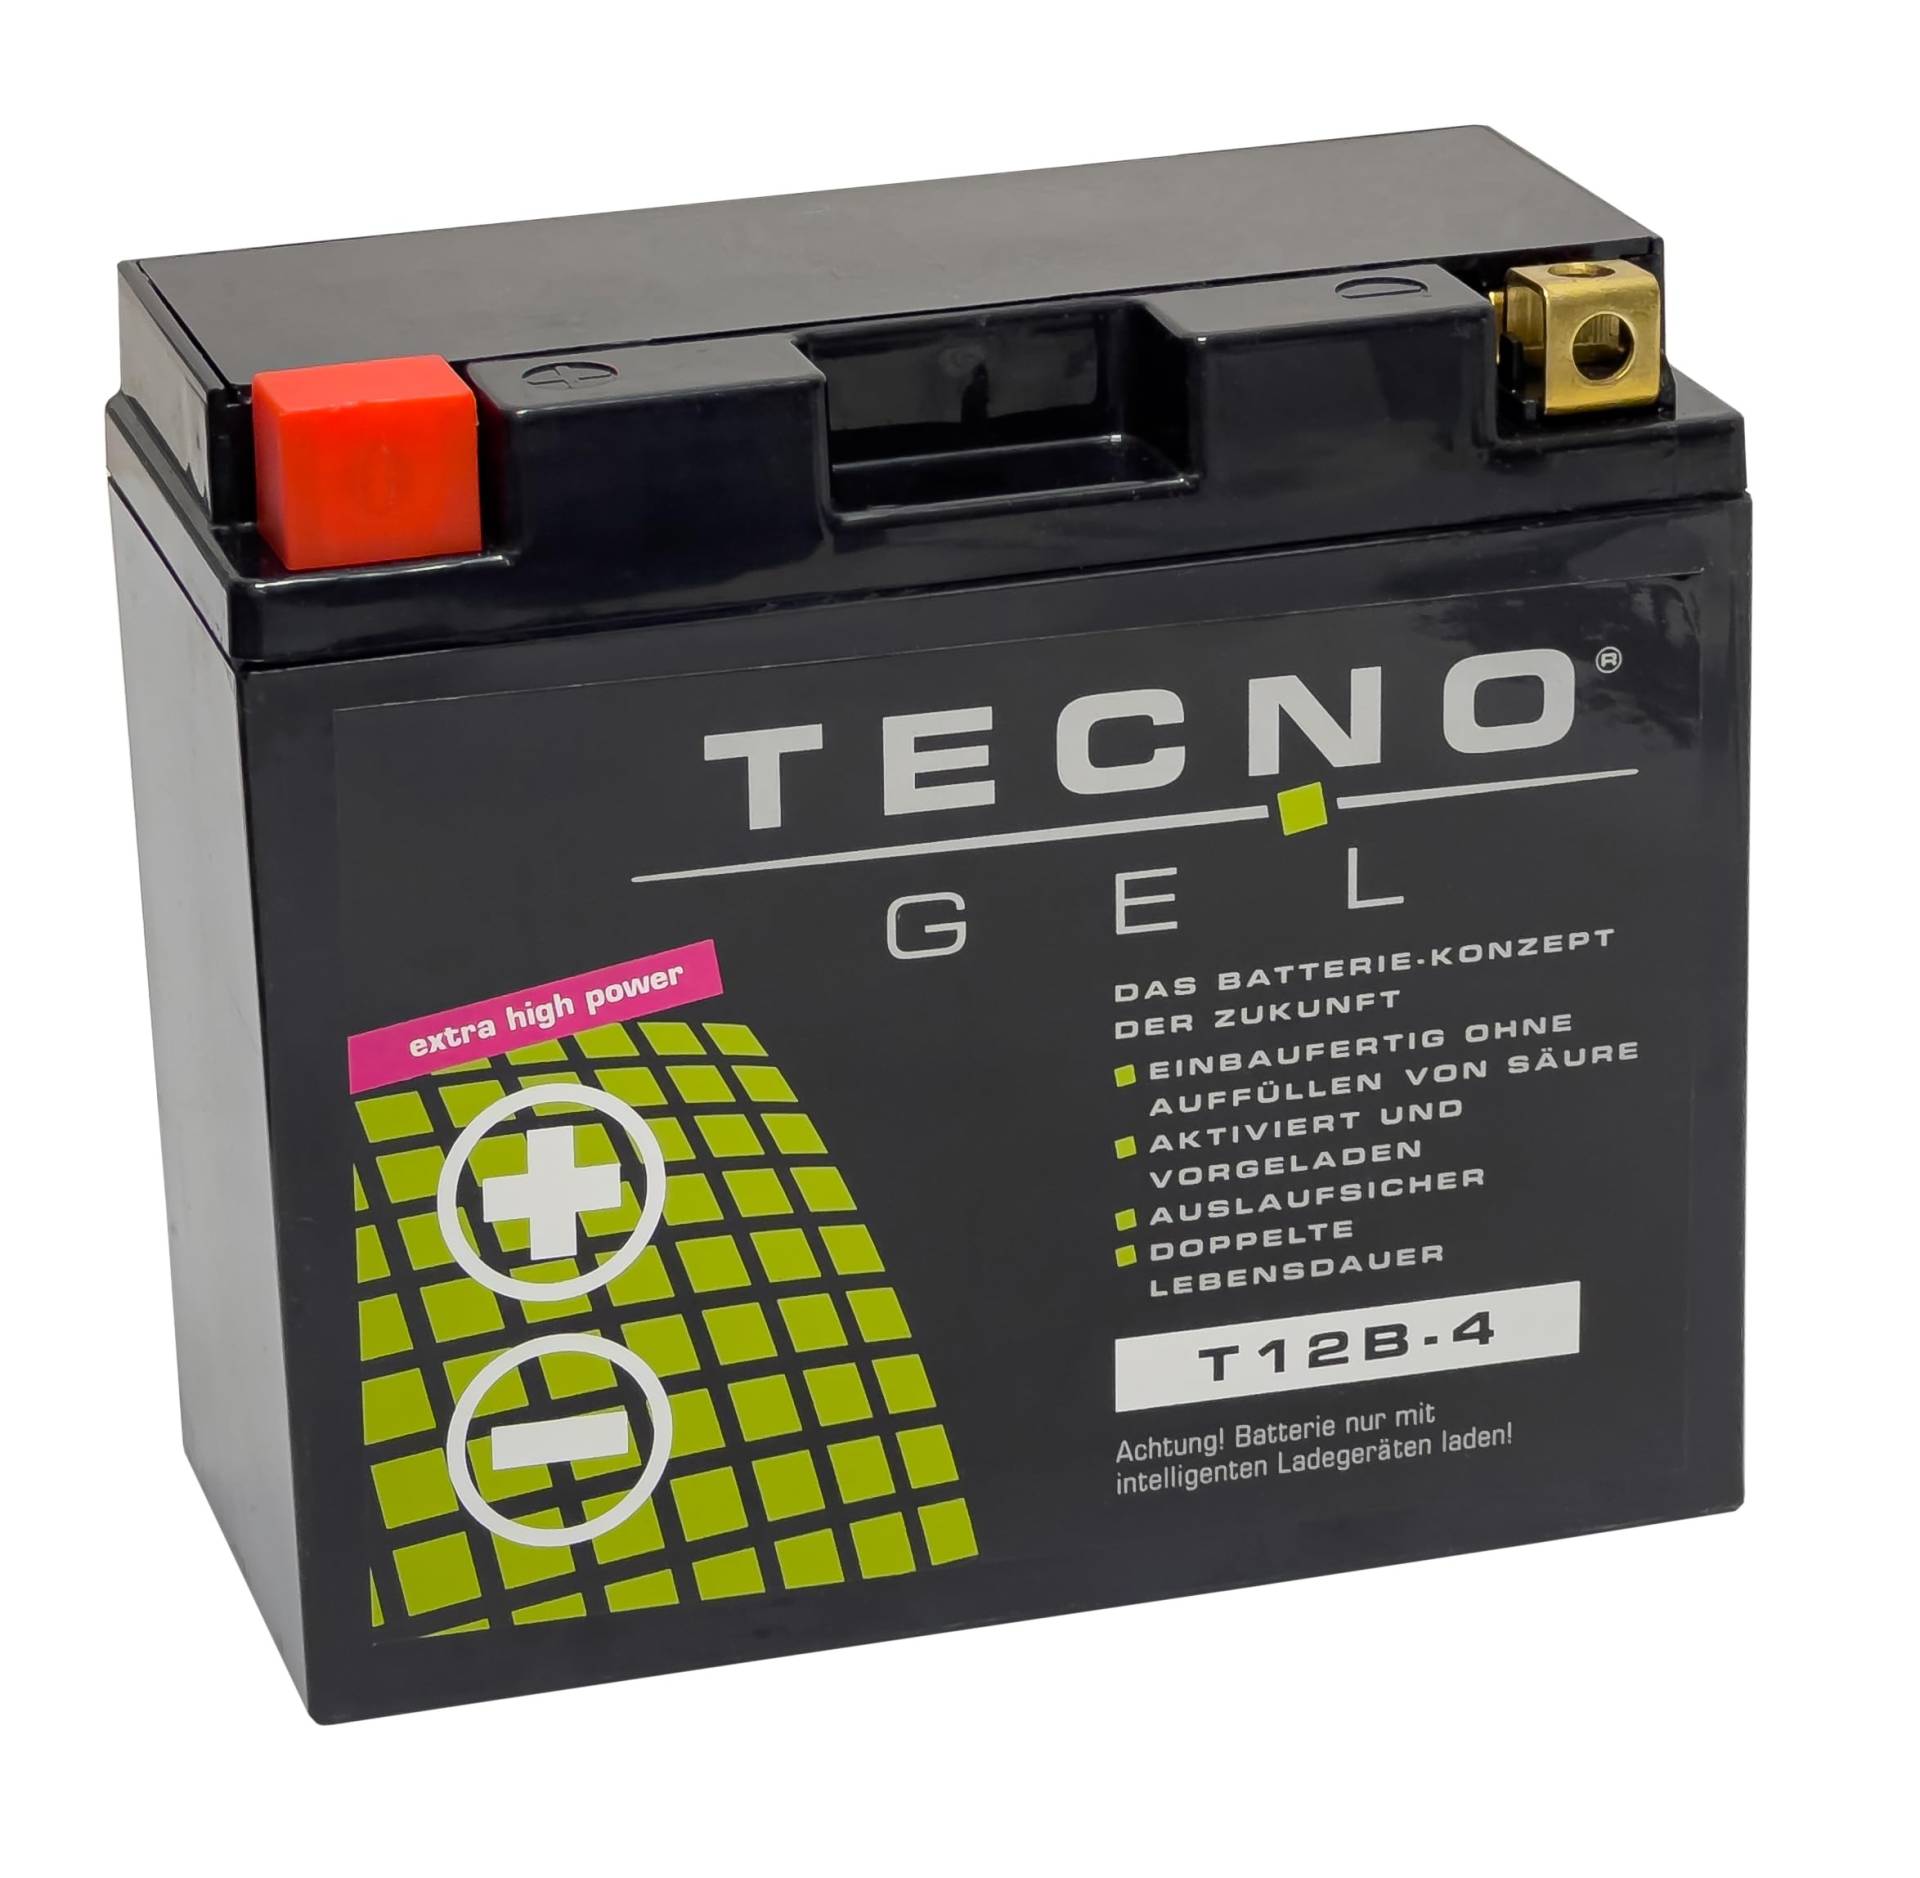 TECNO-GEL BATTERIE für YT12B-4 = YT12B-BS (DIN 51290) für Yamaha FZS 600 H/N u.a von Wirth-Federn